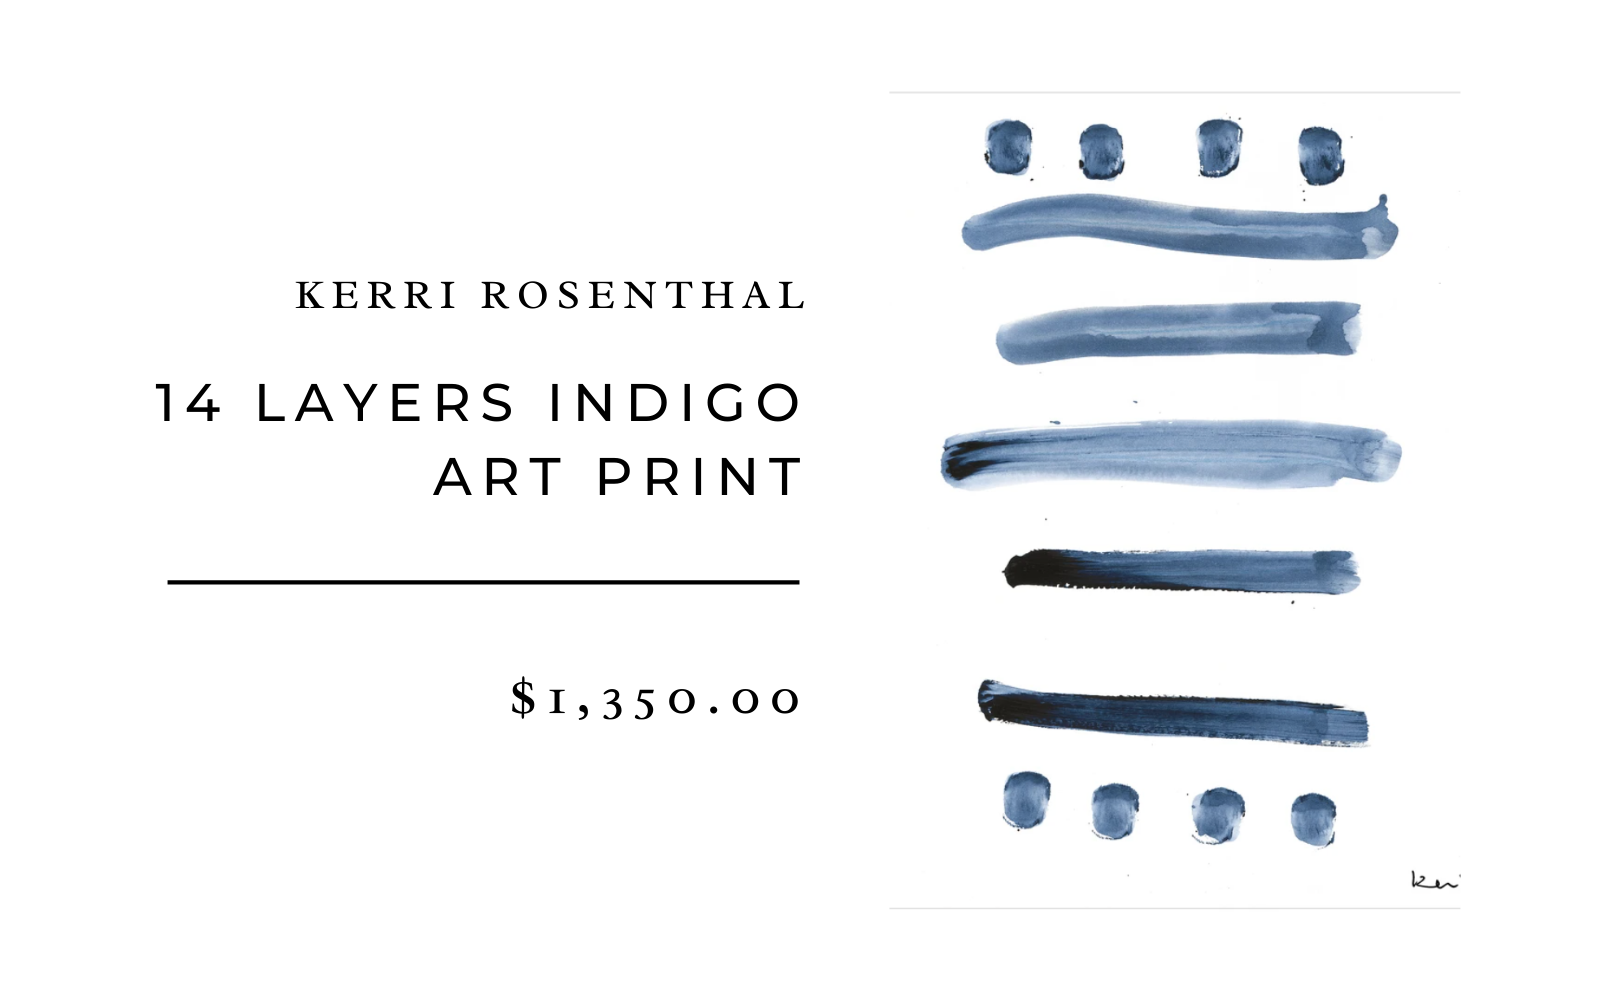 24 layers indigo art print